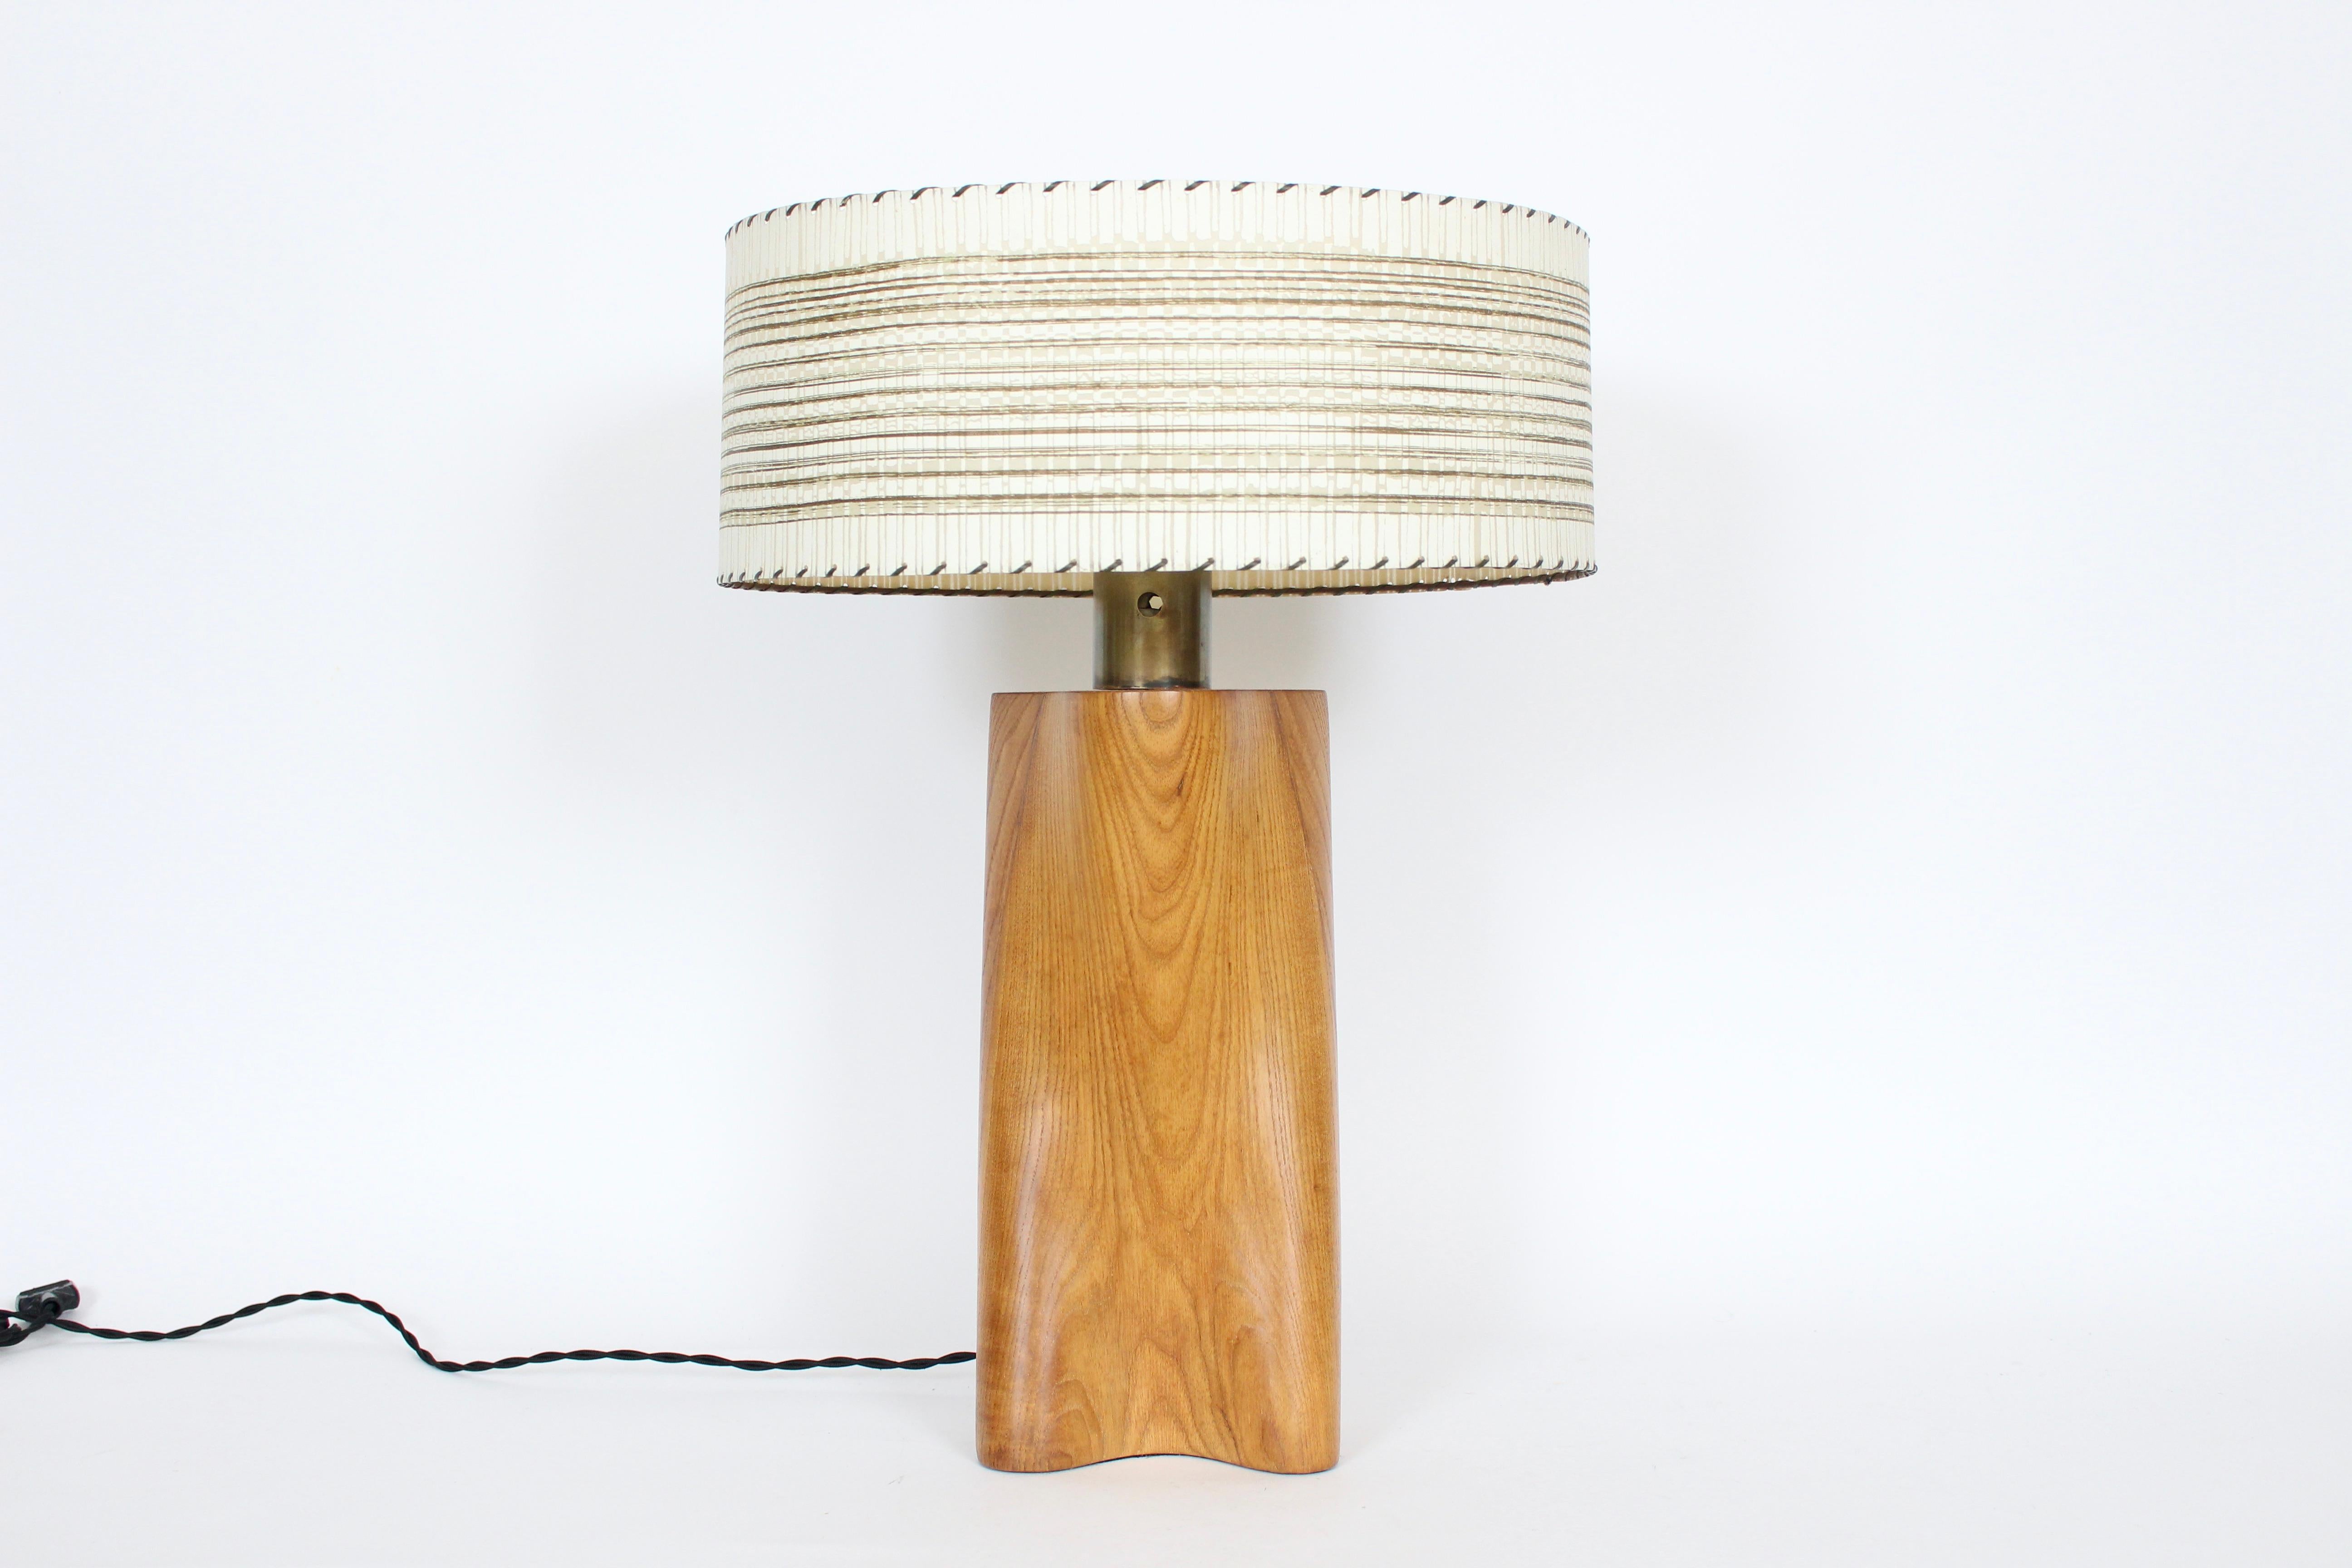 Mid-20th Century Yasha Heifetz Biomorphic Ash Table Lamp with Milk Glass Shade, 1940s For Sale